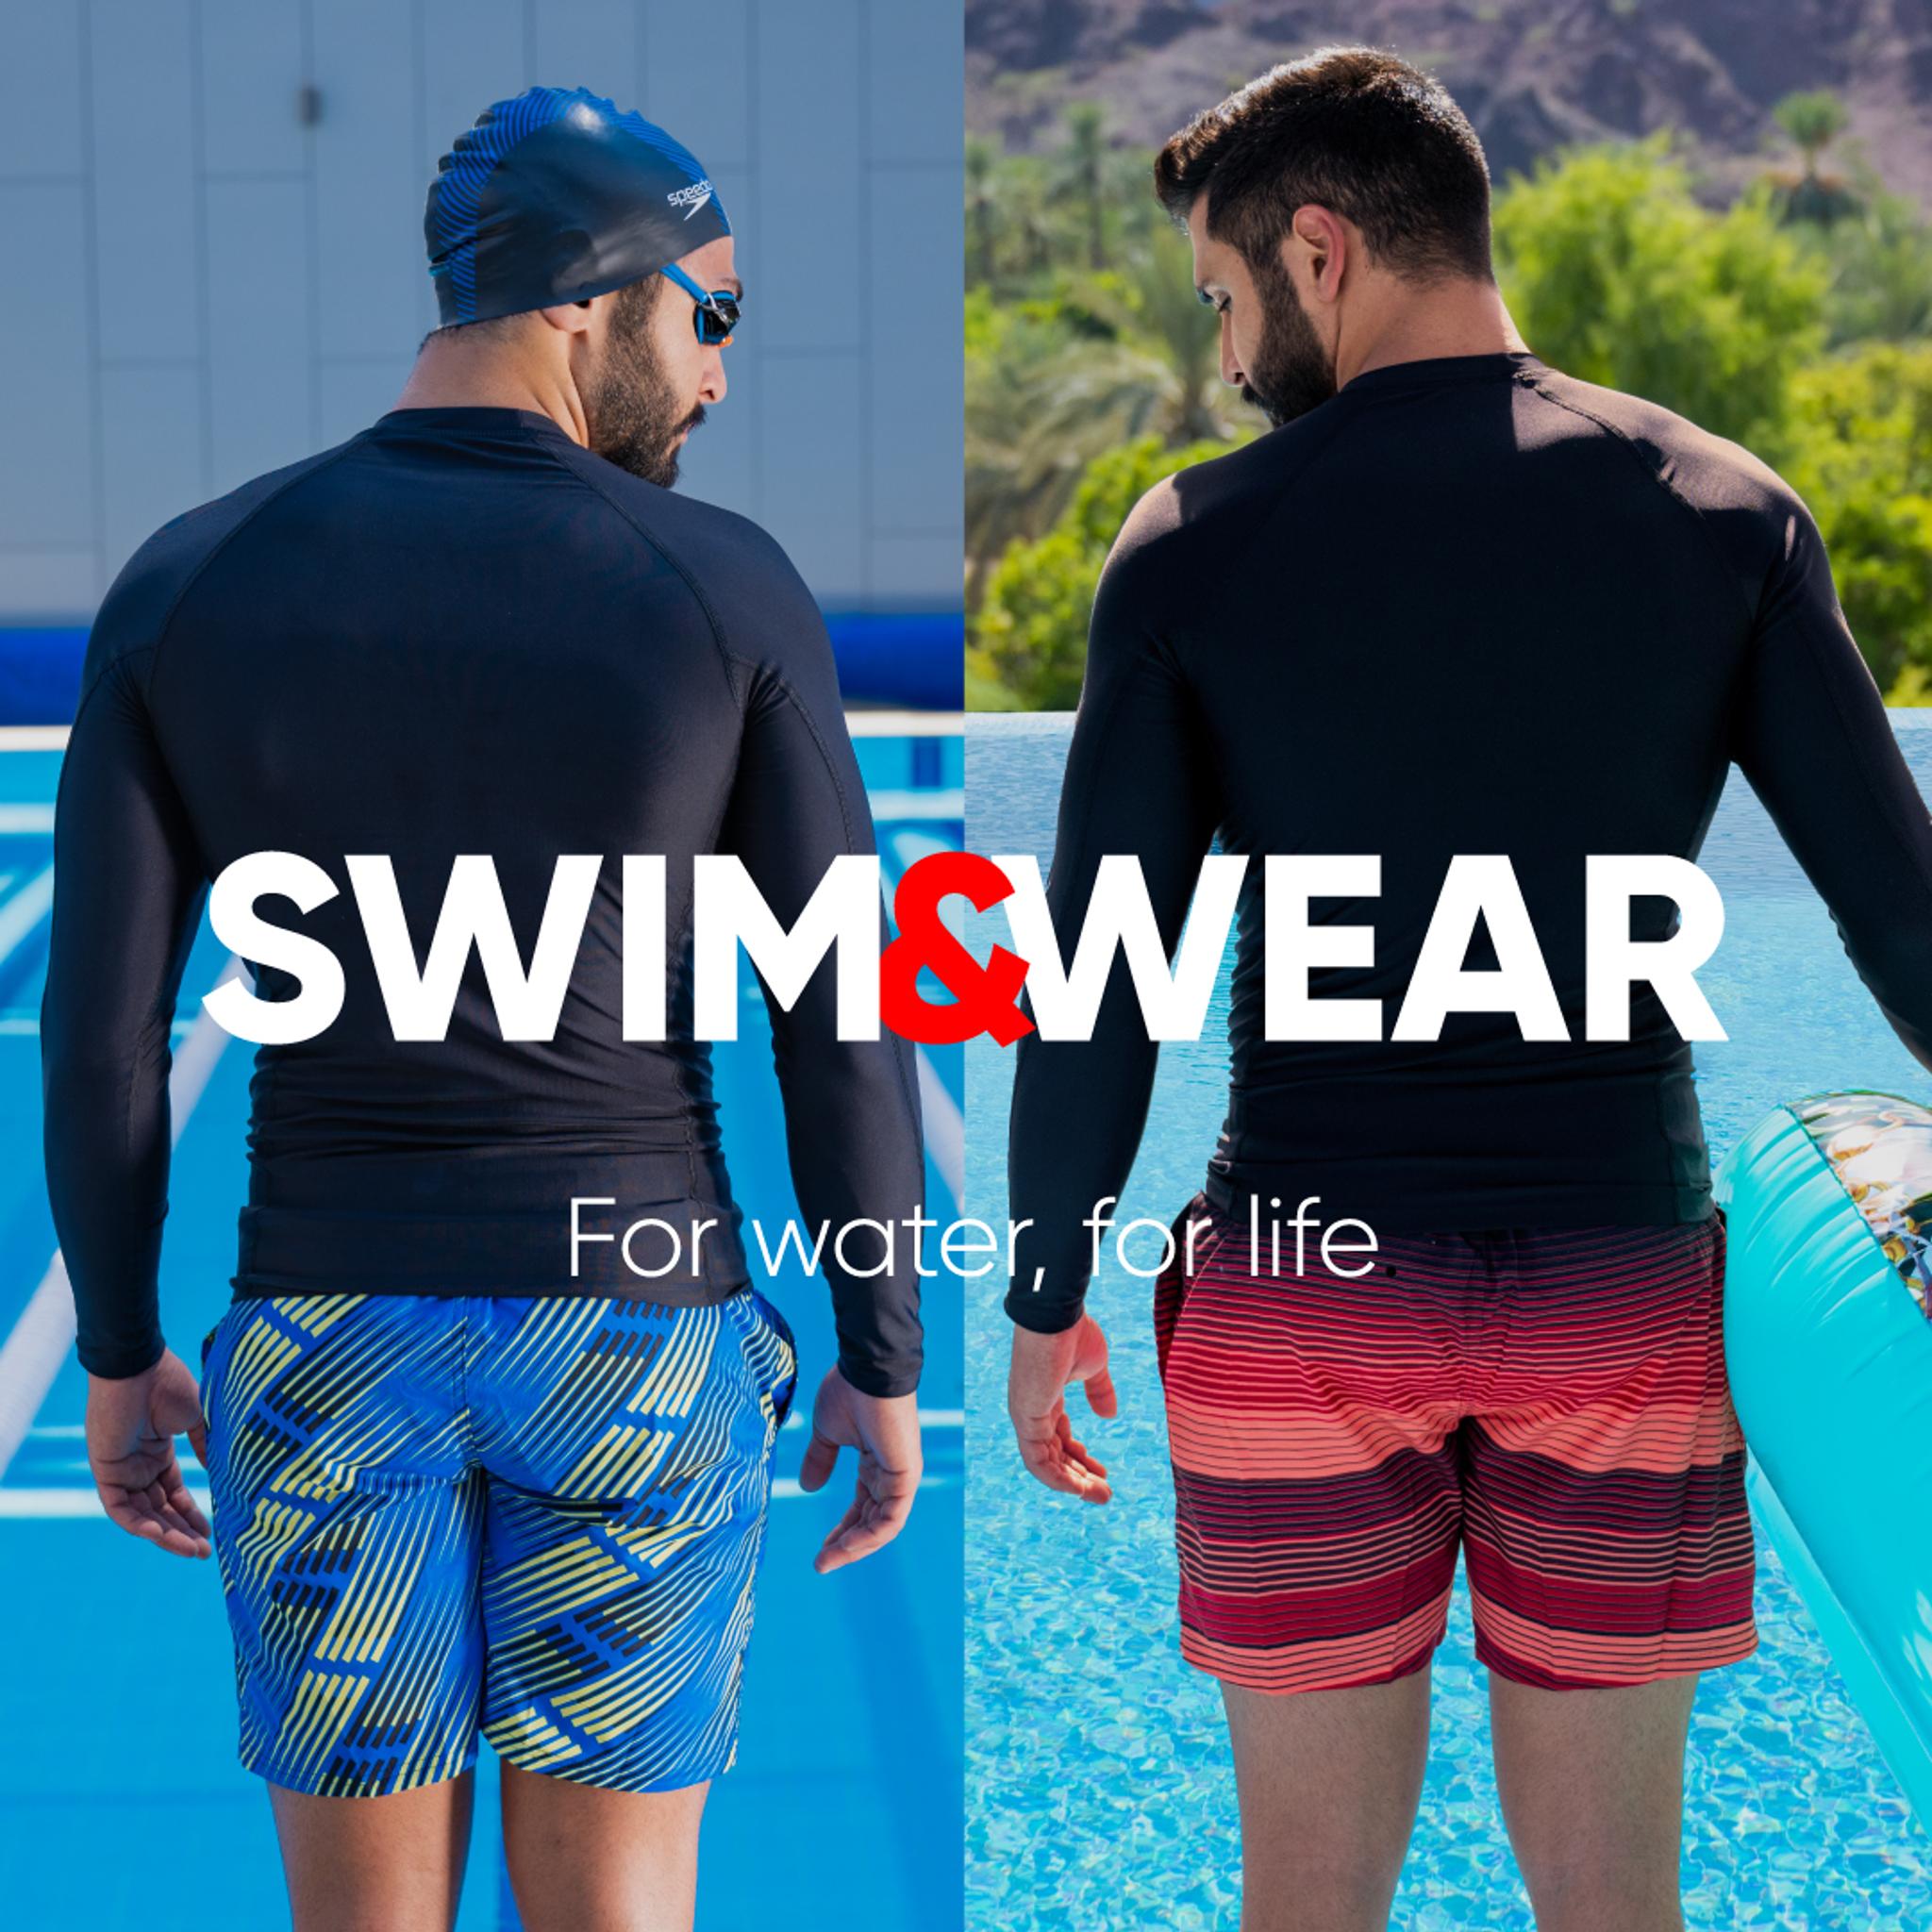 Swim & Wear Key Visual